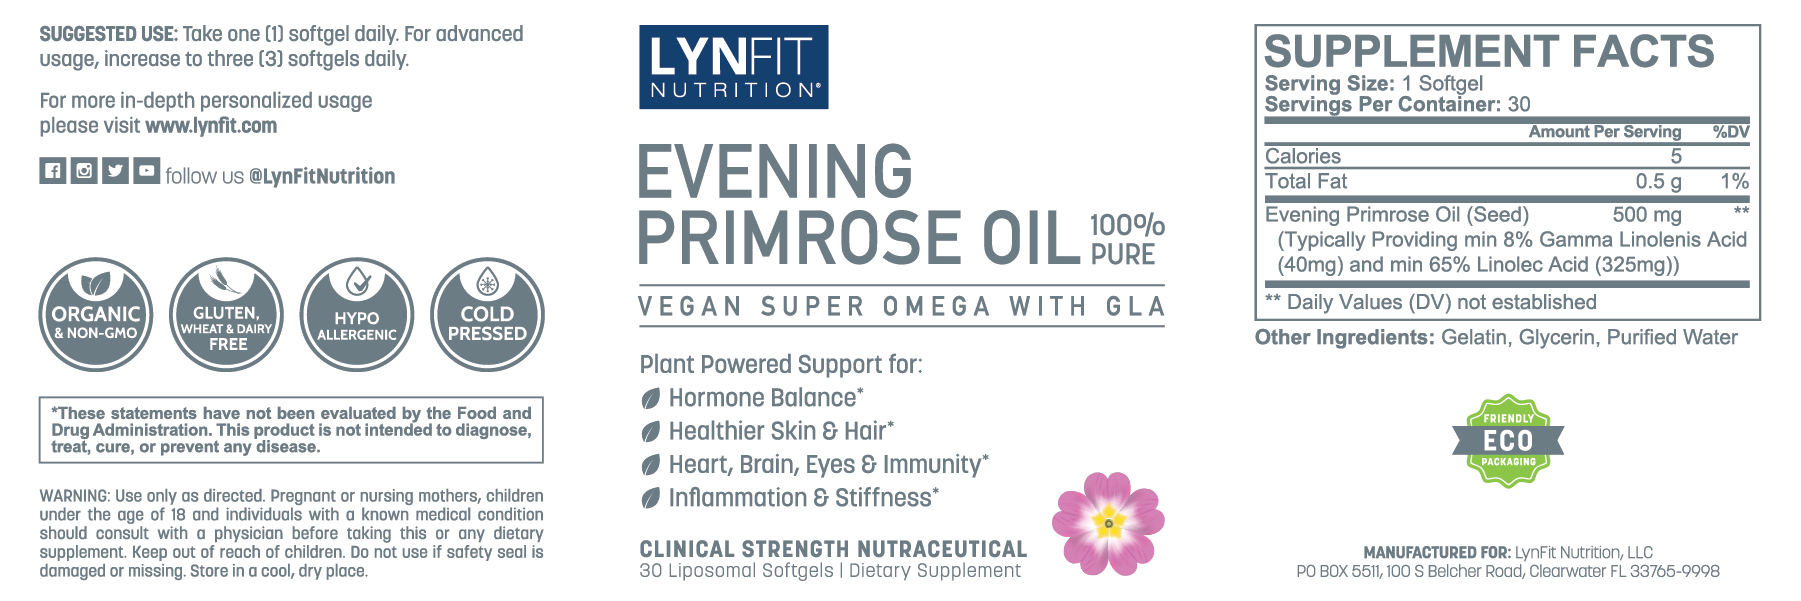 LynFit Nutrition Evening Primrose Oil